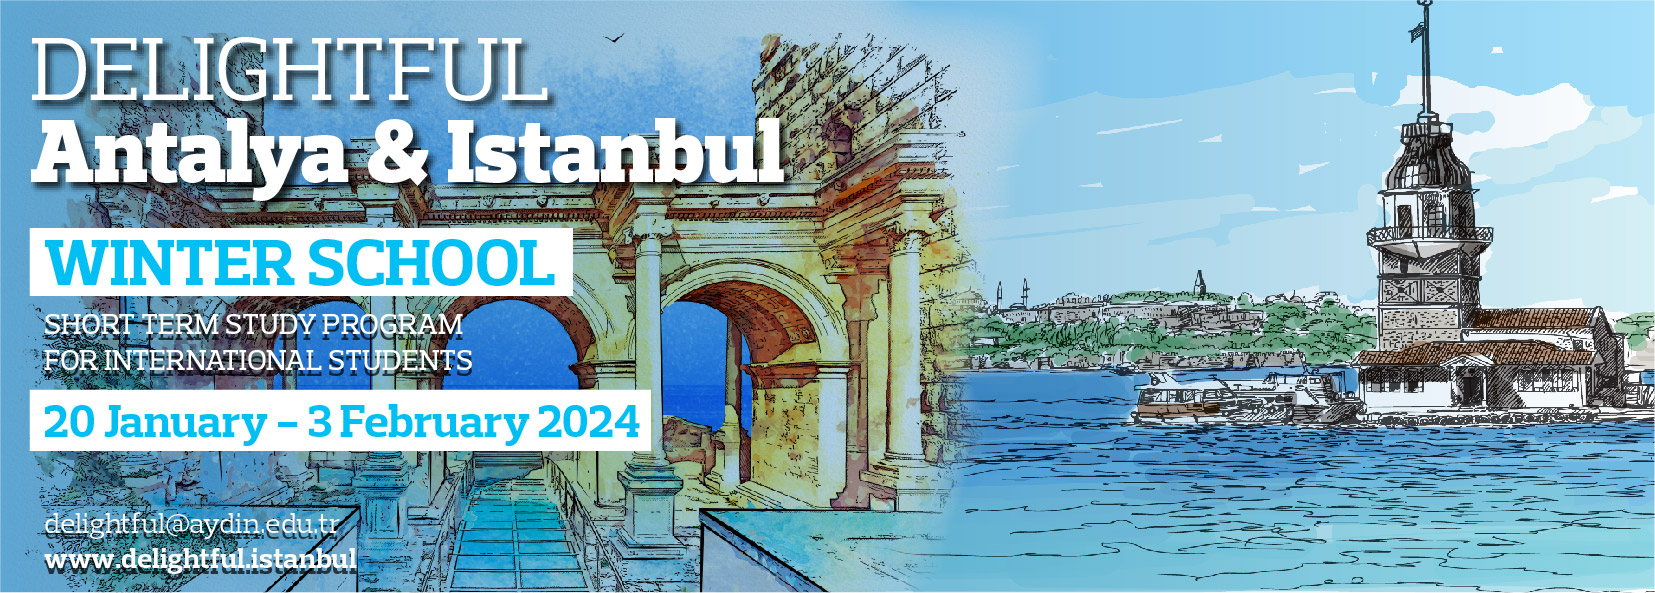 Delightful-Istanbul-2024-Winter-School-Banner-1.jpg